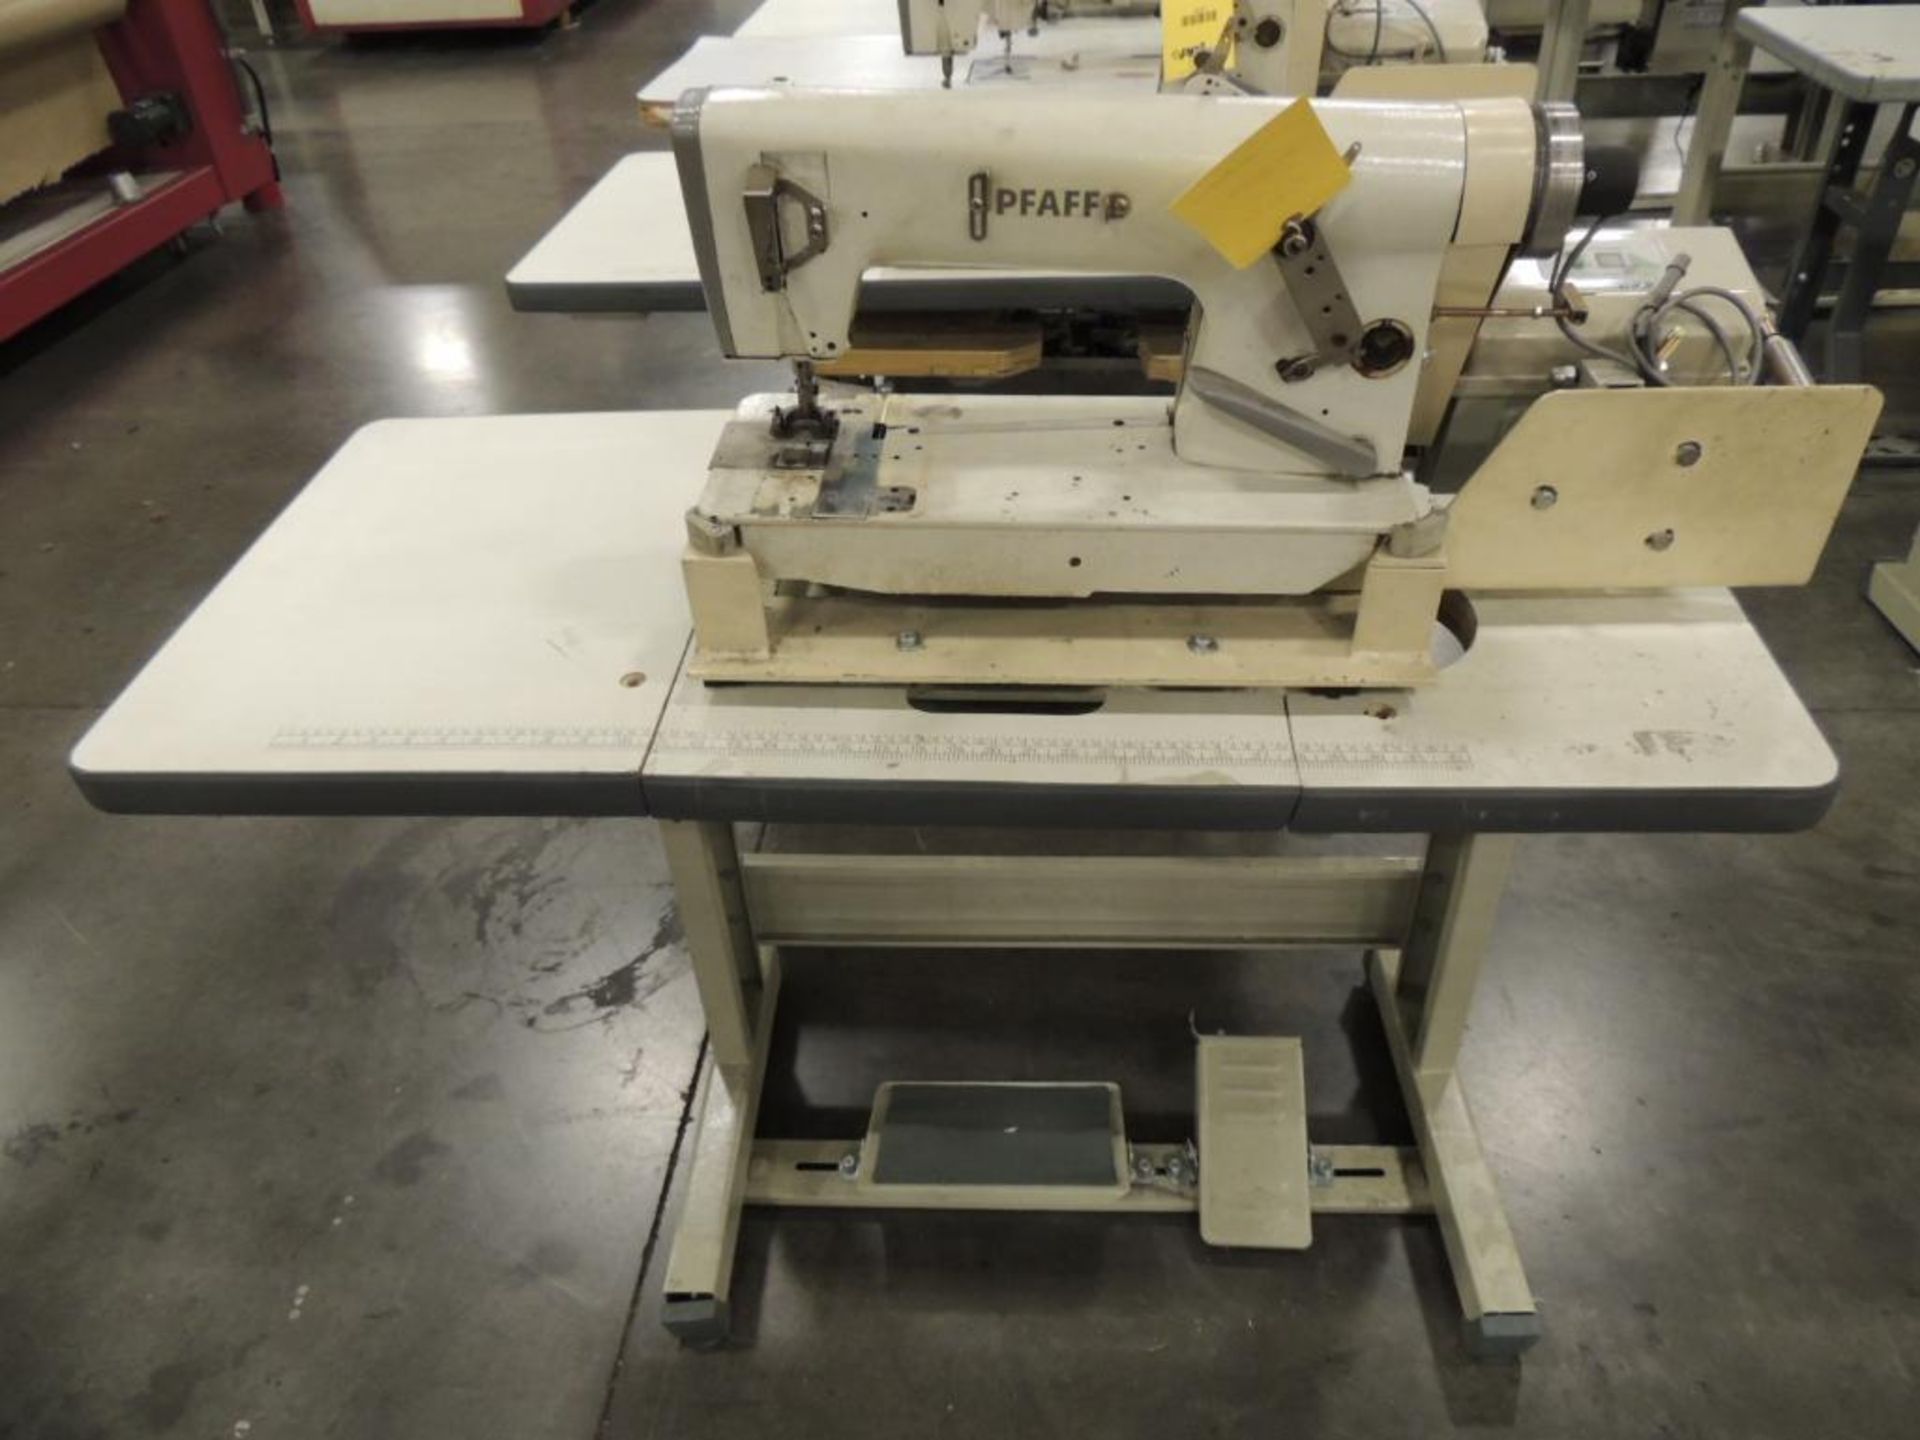 Pfaff KI5483 Sewing Machine, on Table - Image 2 of 3